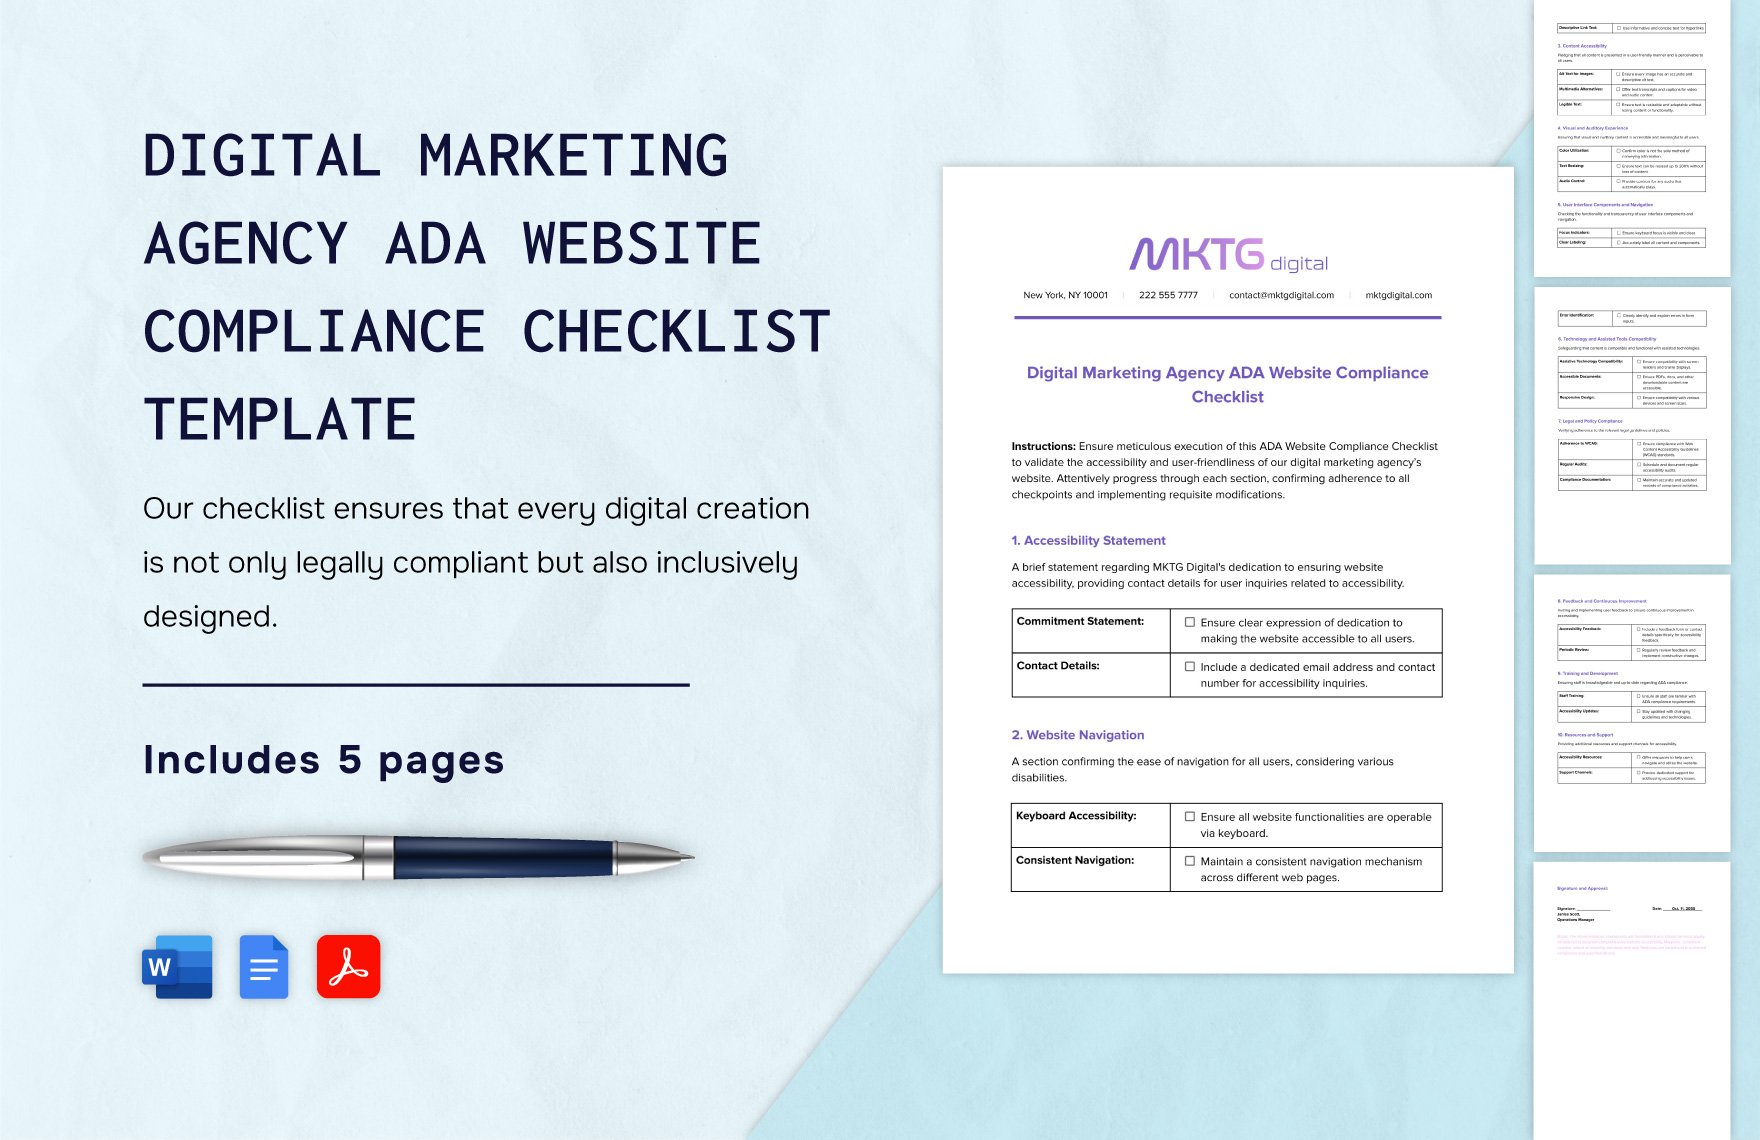 Digital Marketing Agency ADA Website Compliance Checklist Template